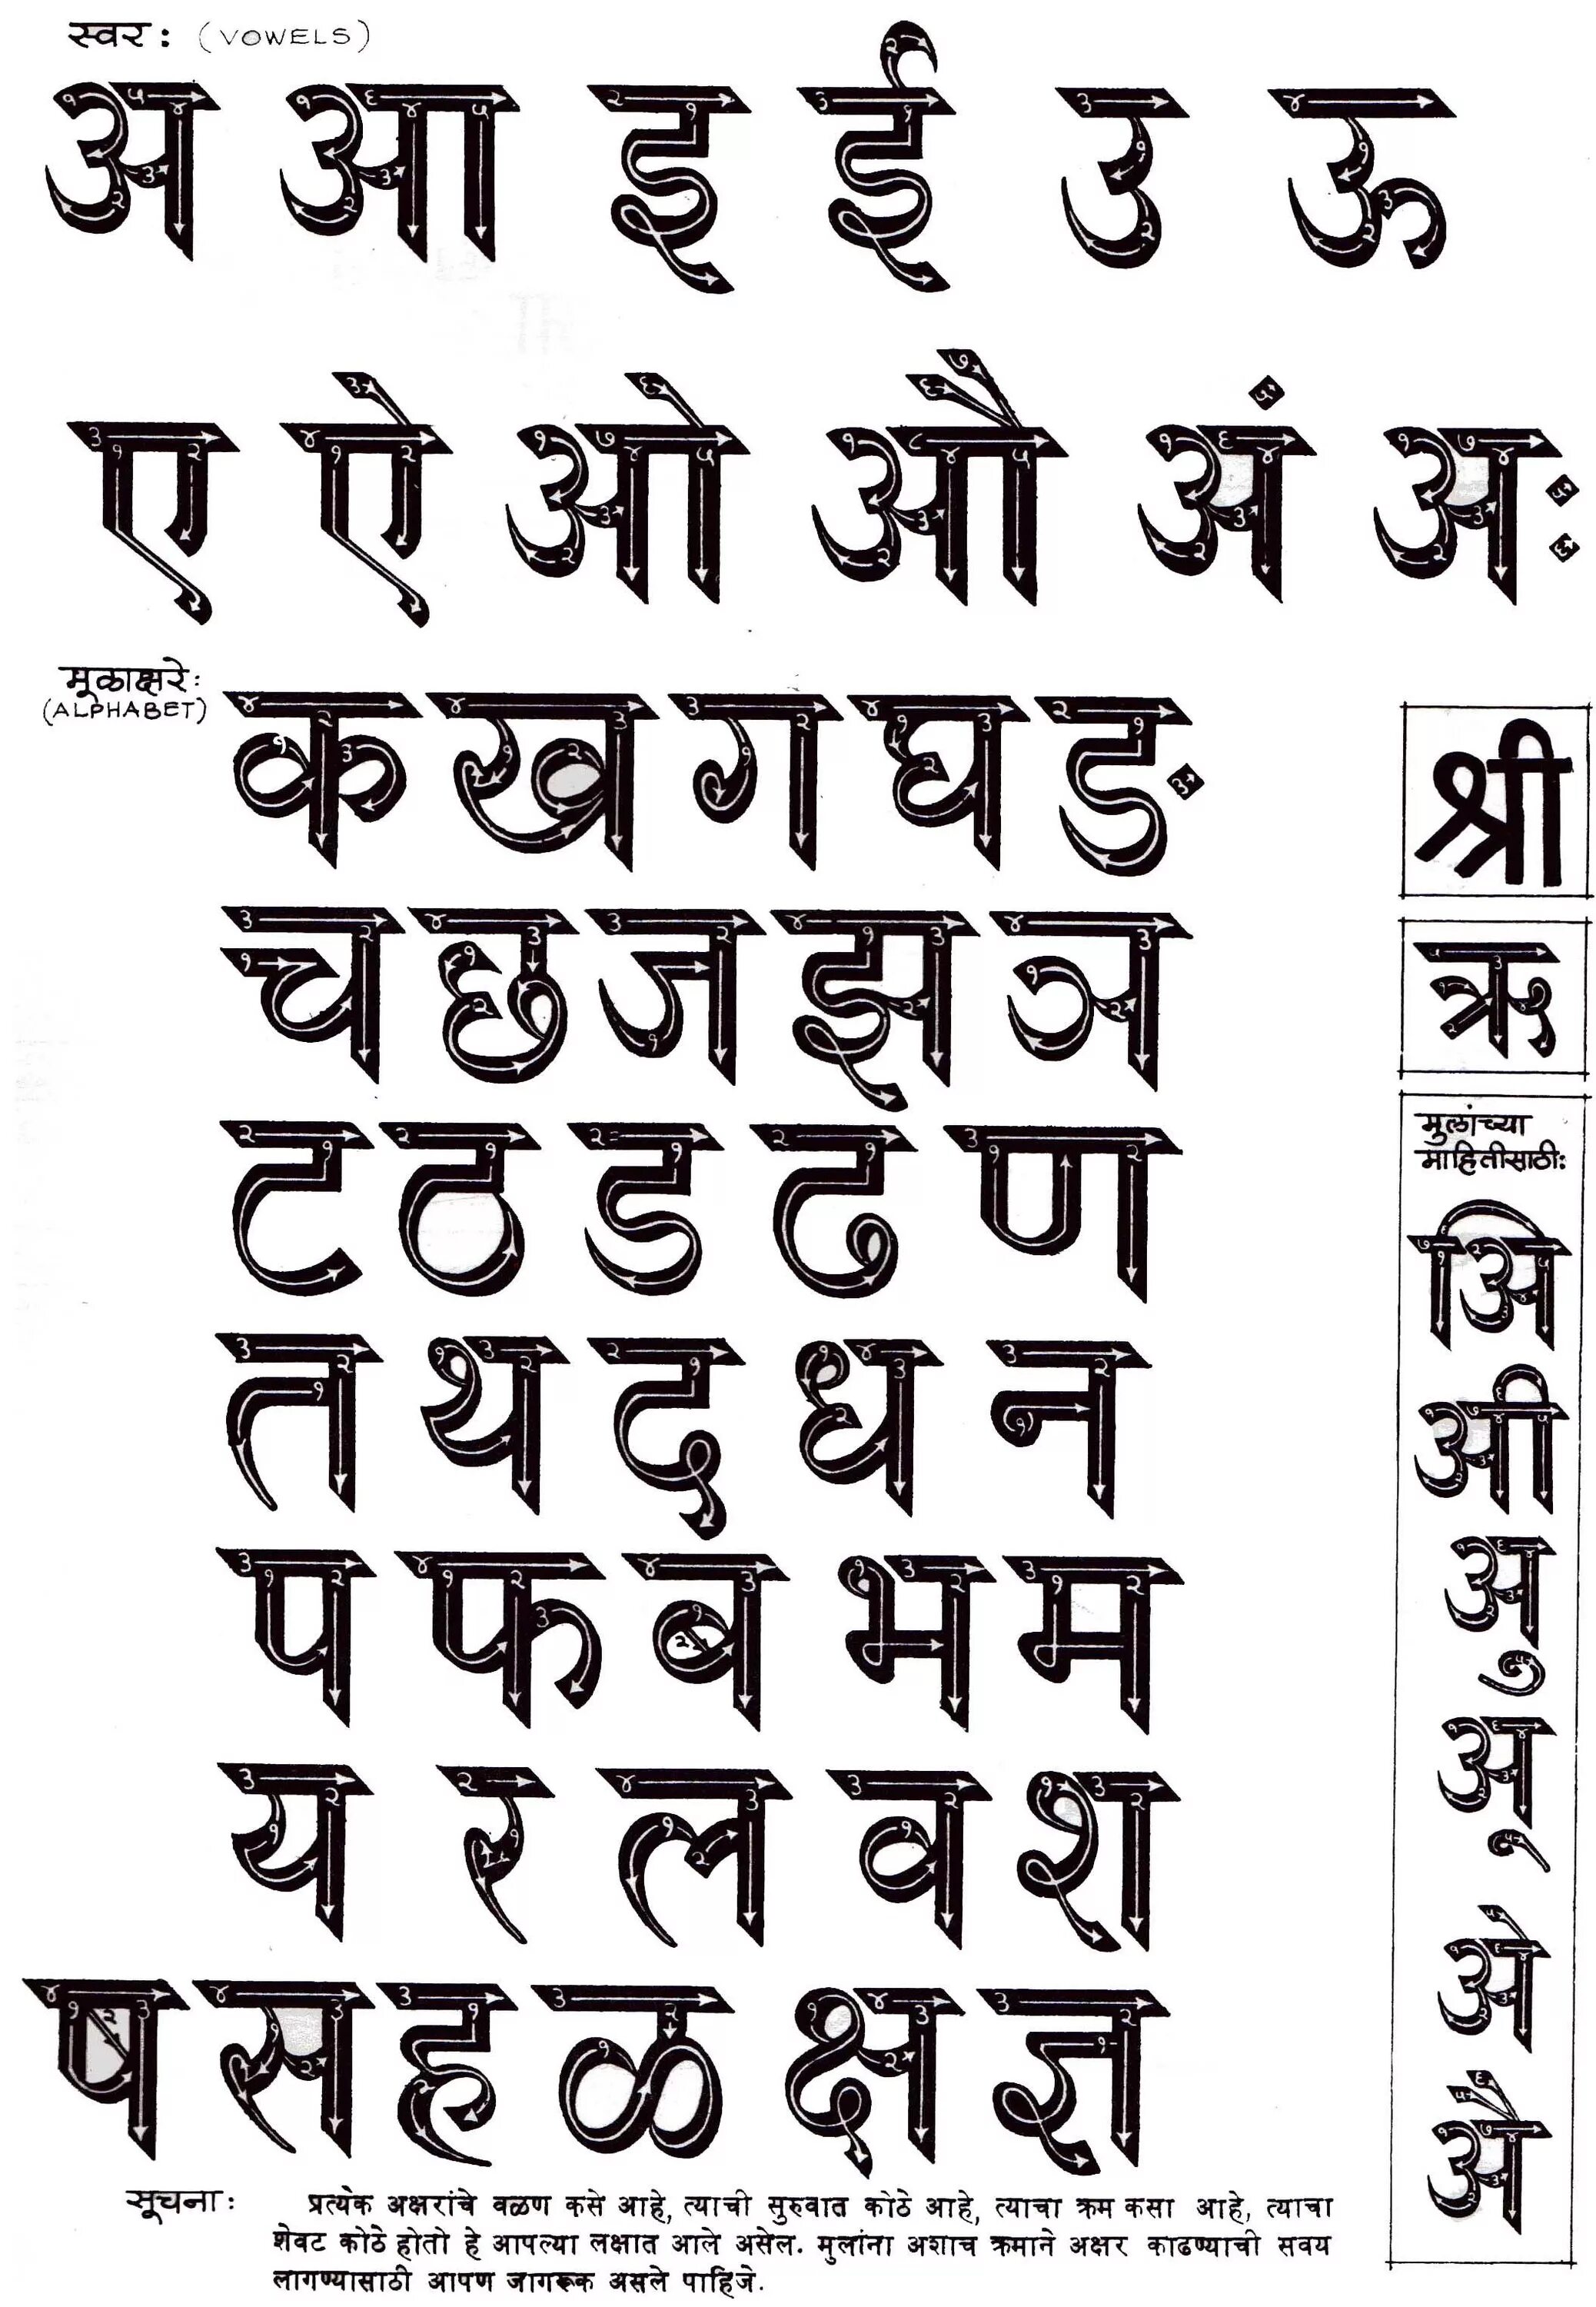 Древний индийский буквы. Алфавит деванагари хинди. Язык санскрит алфавит. Деванагари санскрит. Индийская письменность санскрит.